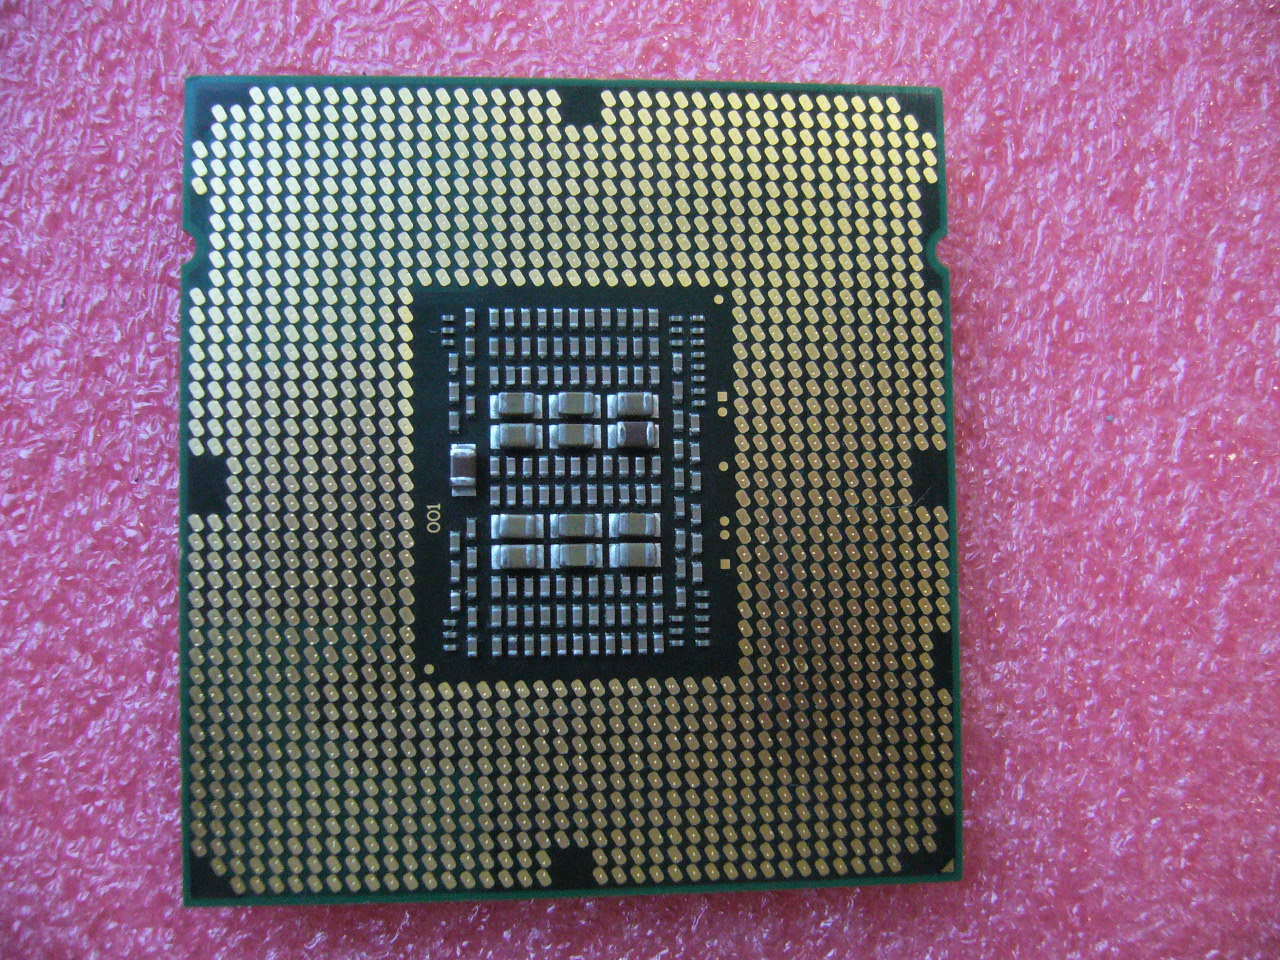 QTY 1x Intel CPU E5-2428L CPU 6-Cores 1.8Ghz LGA1356 SR0M3 TDP 60W - Click Image to Close